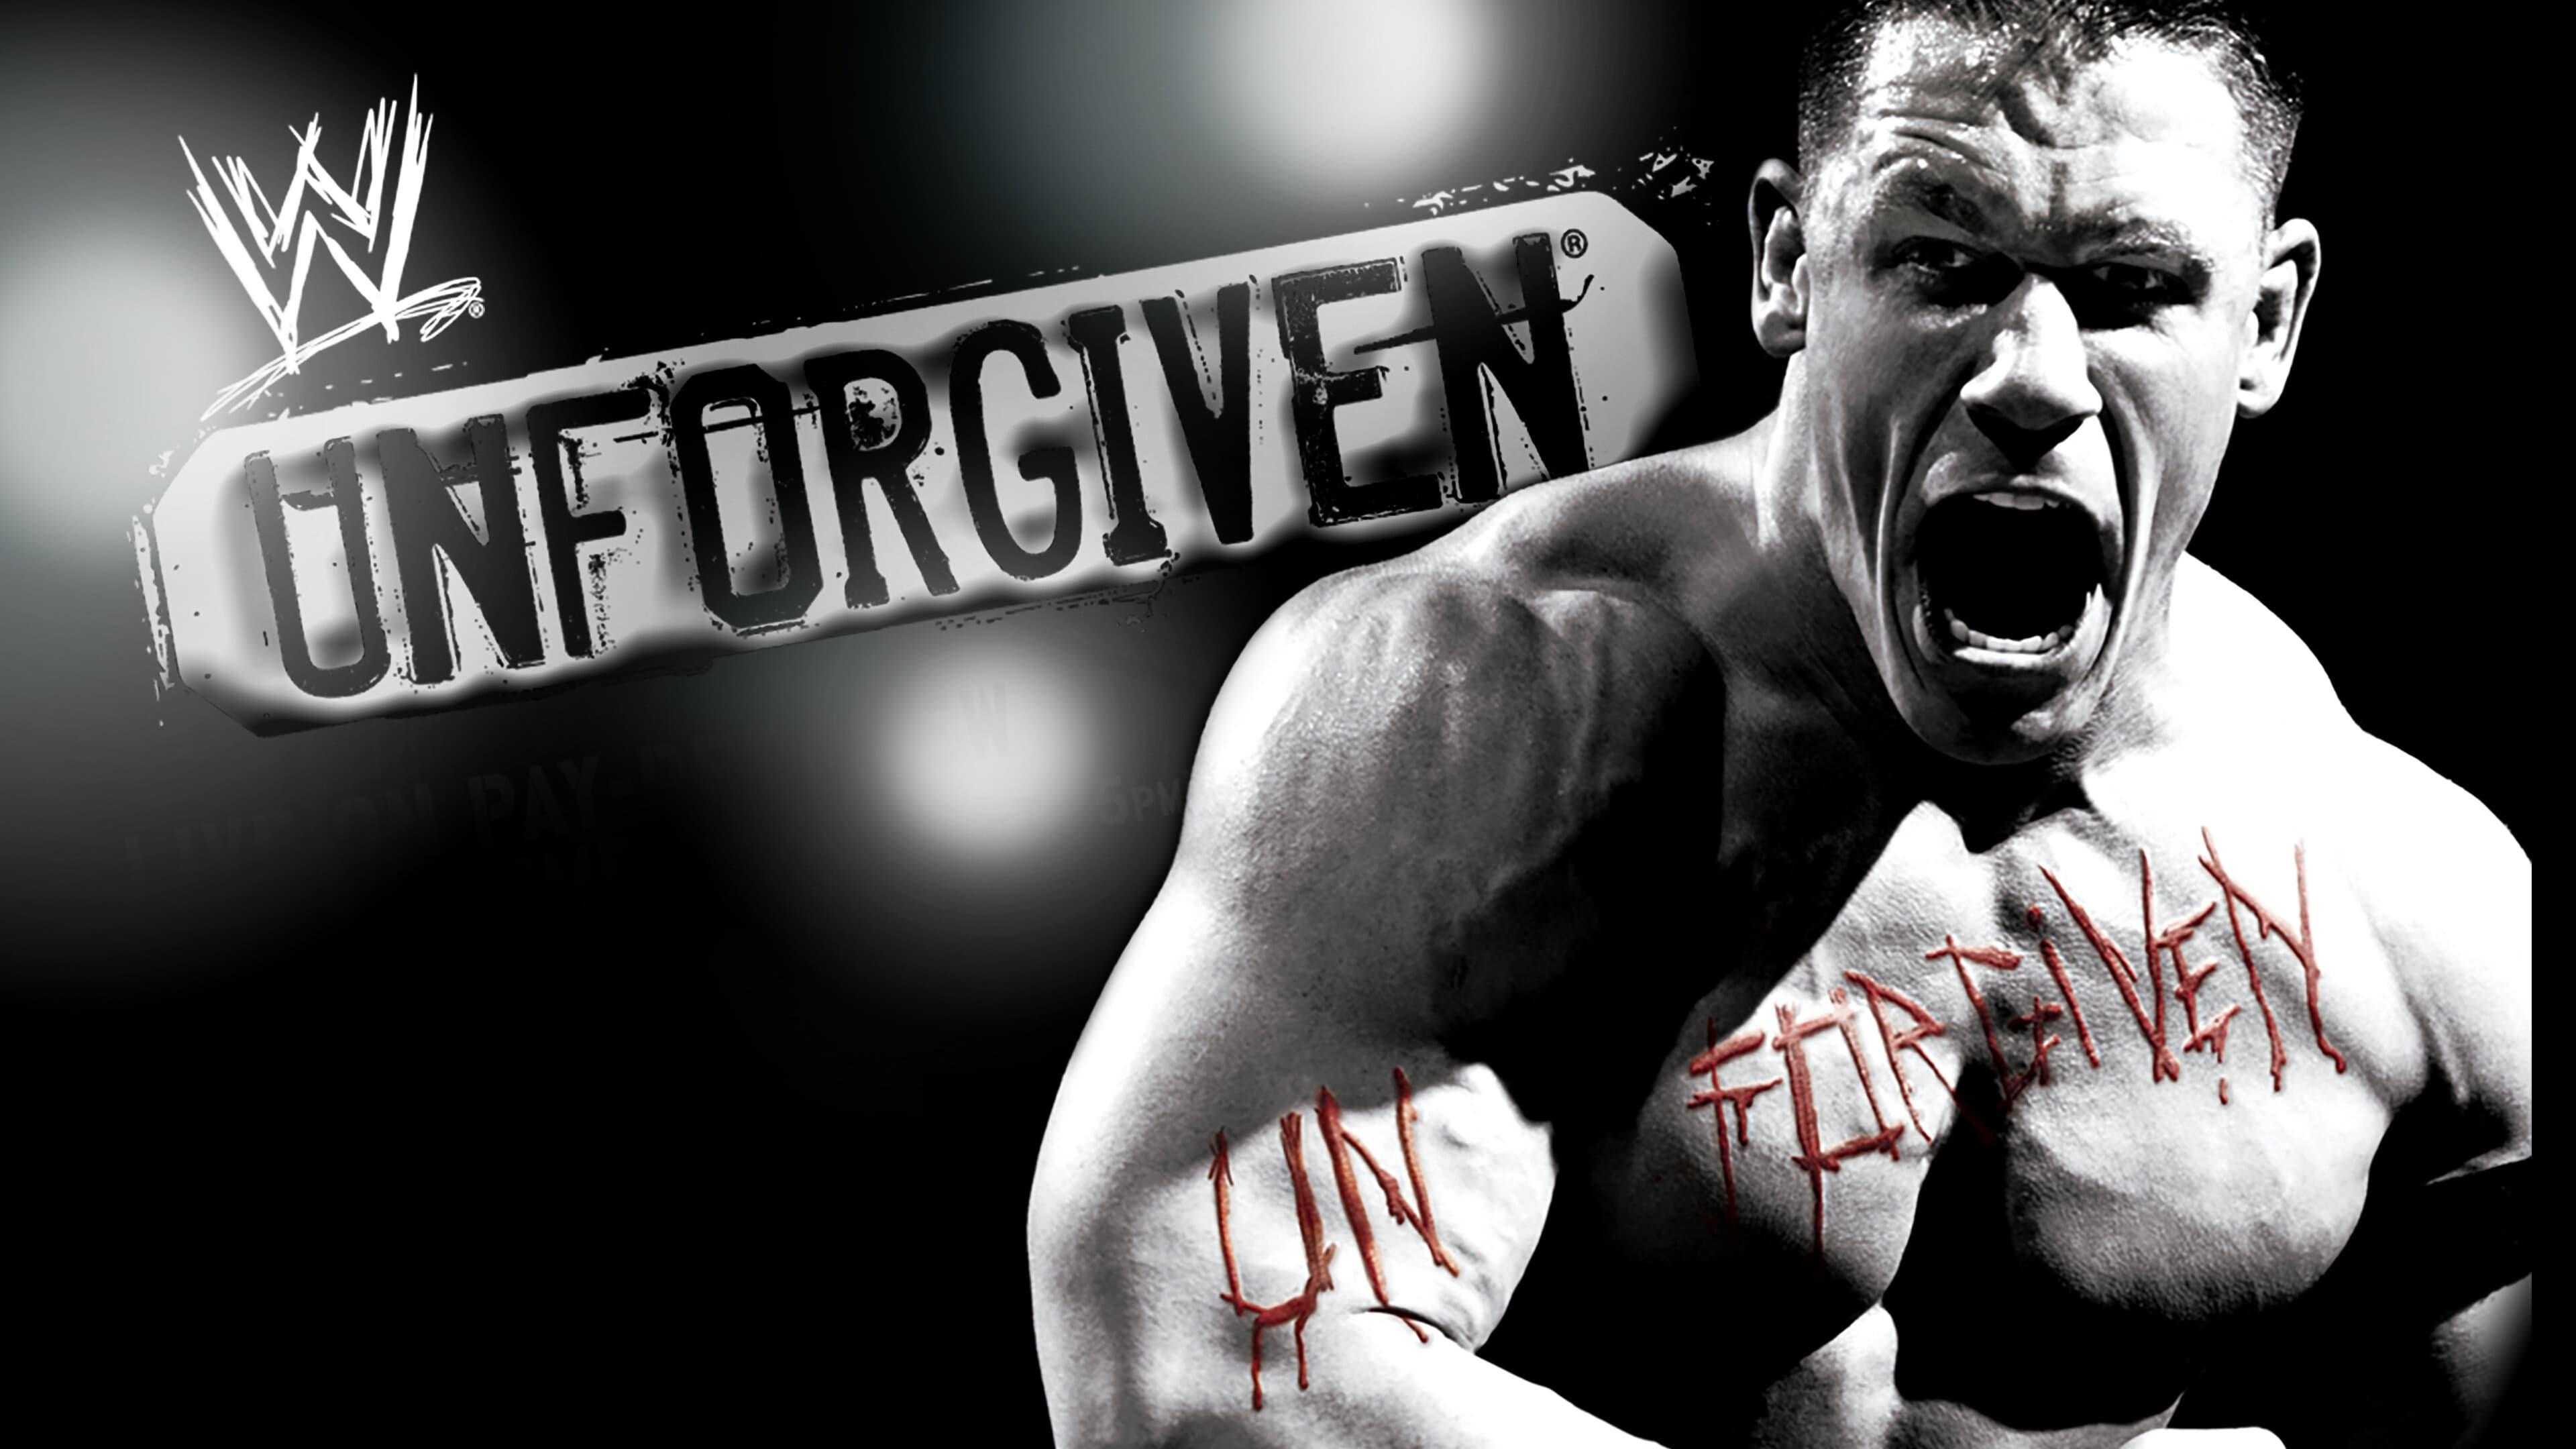 WWE Unforgiven 2006 backdrop